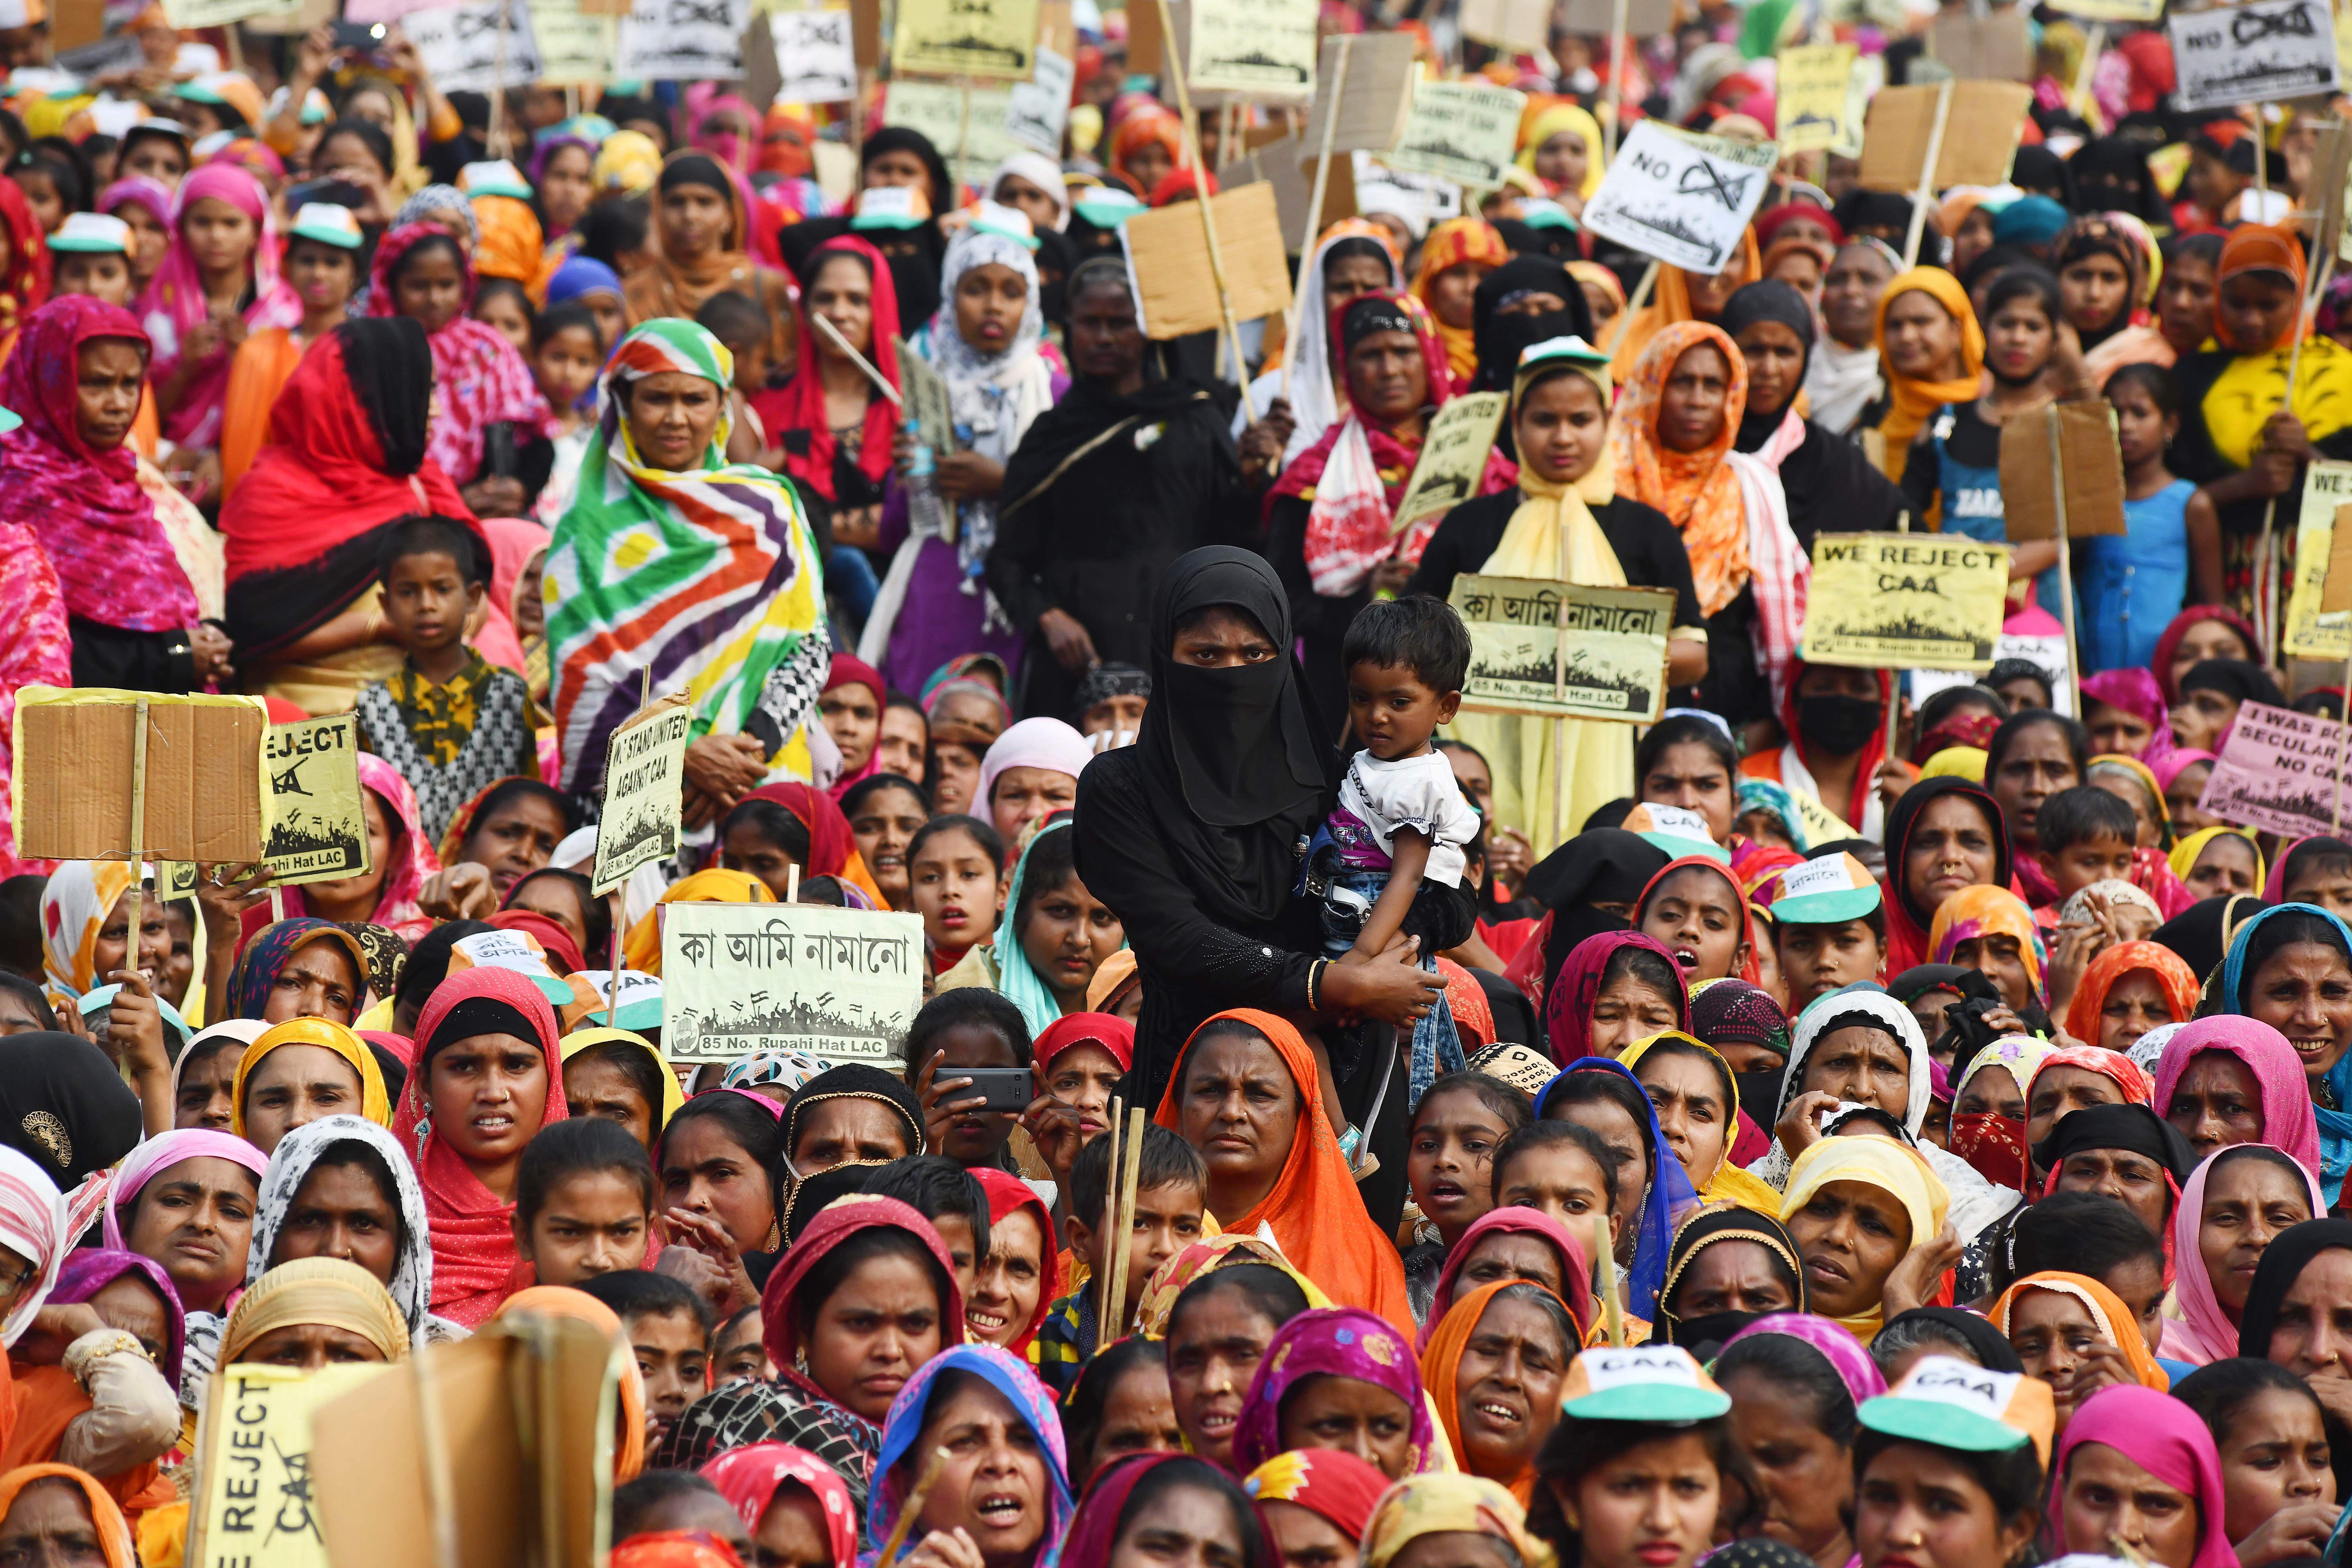 Muslim women protesting in India